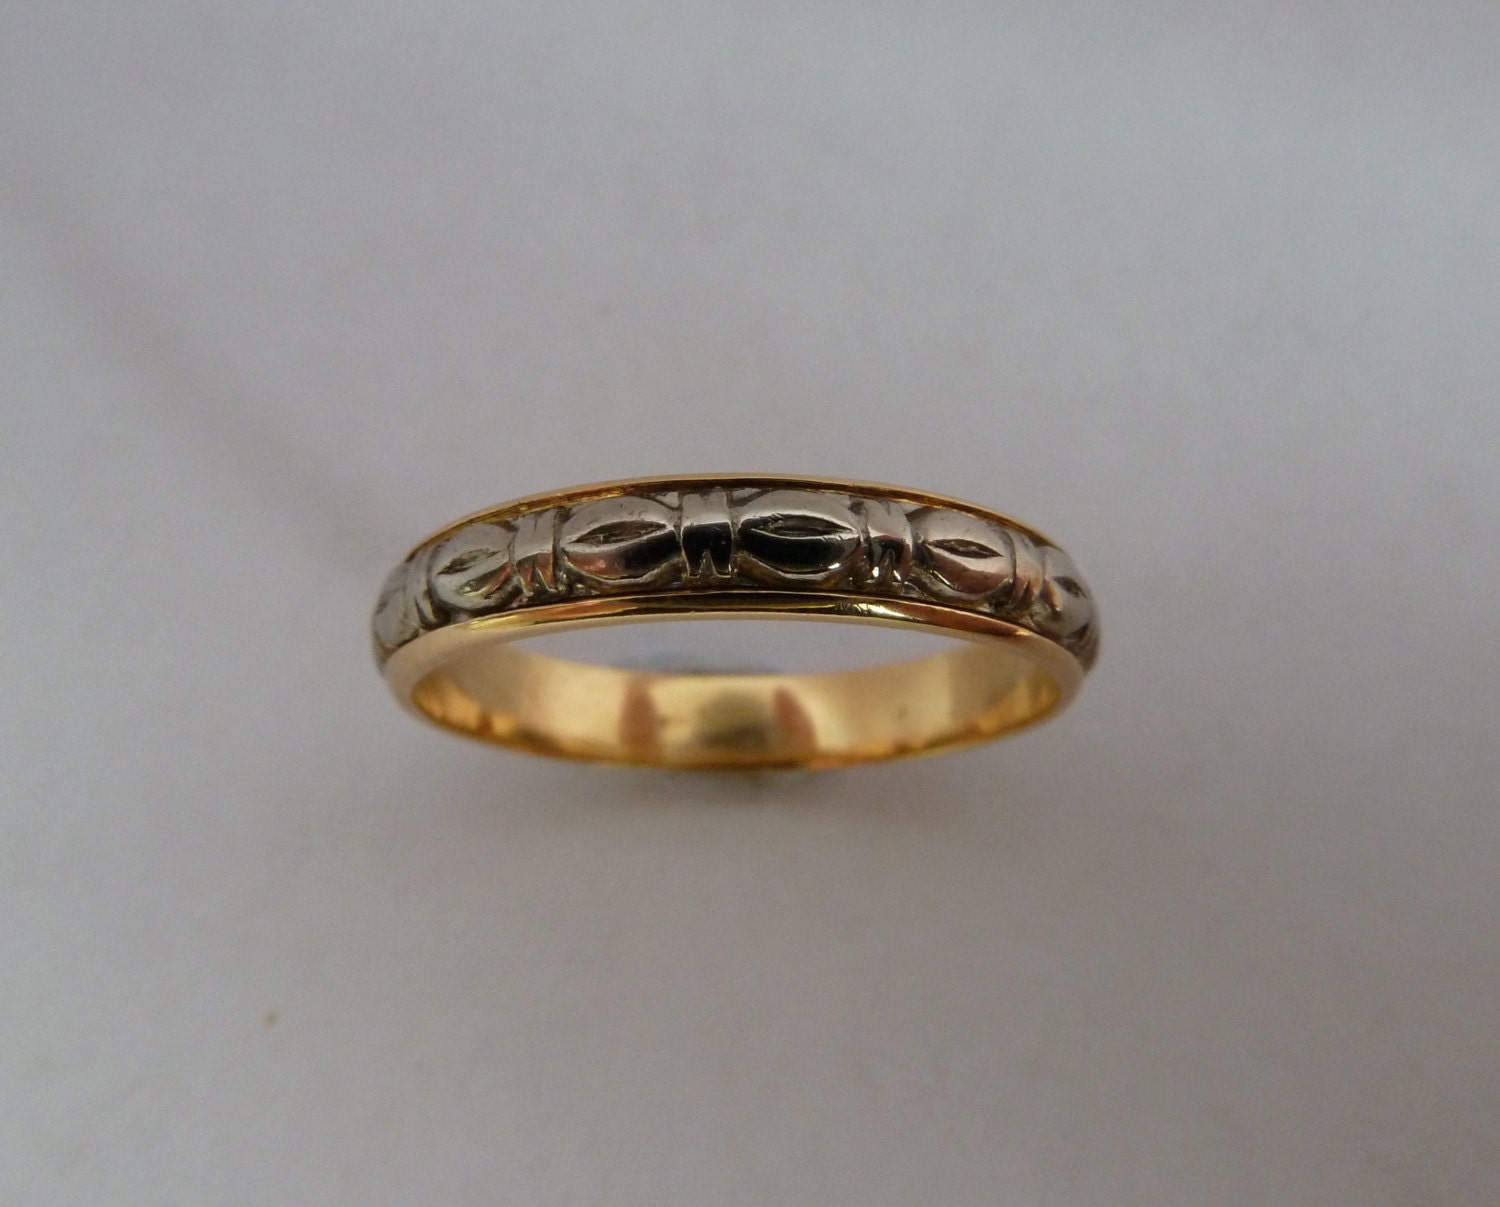 Vintage 18 Carat White & Yellow Gold Wedding Ring SALE 10% Off